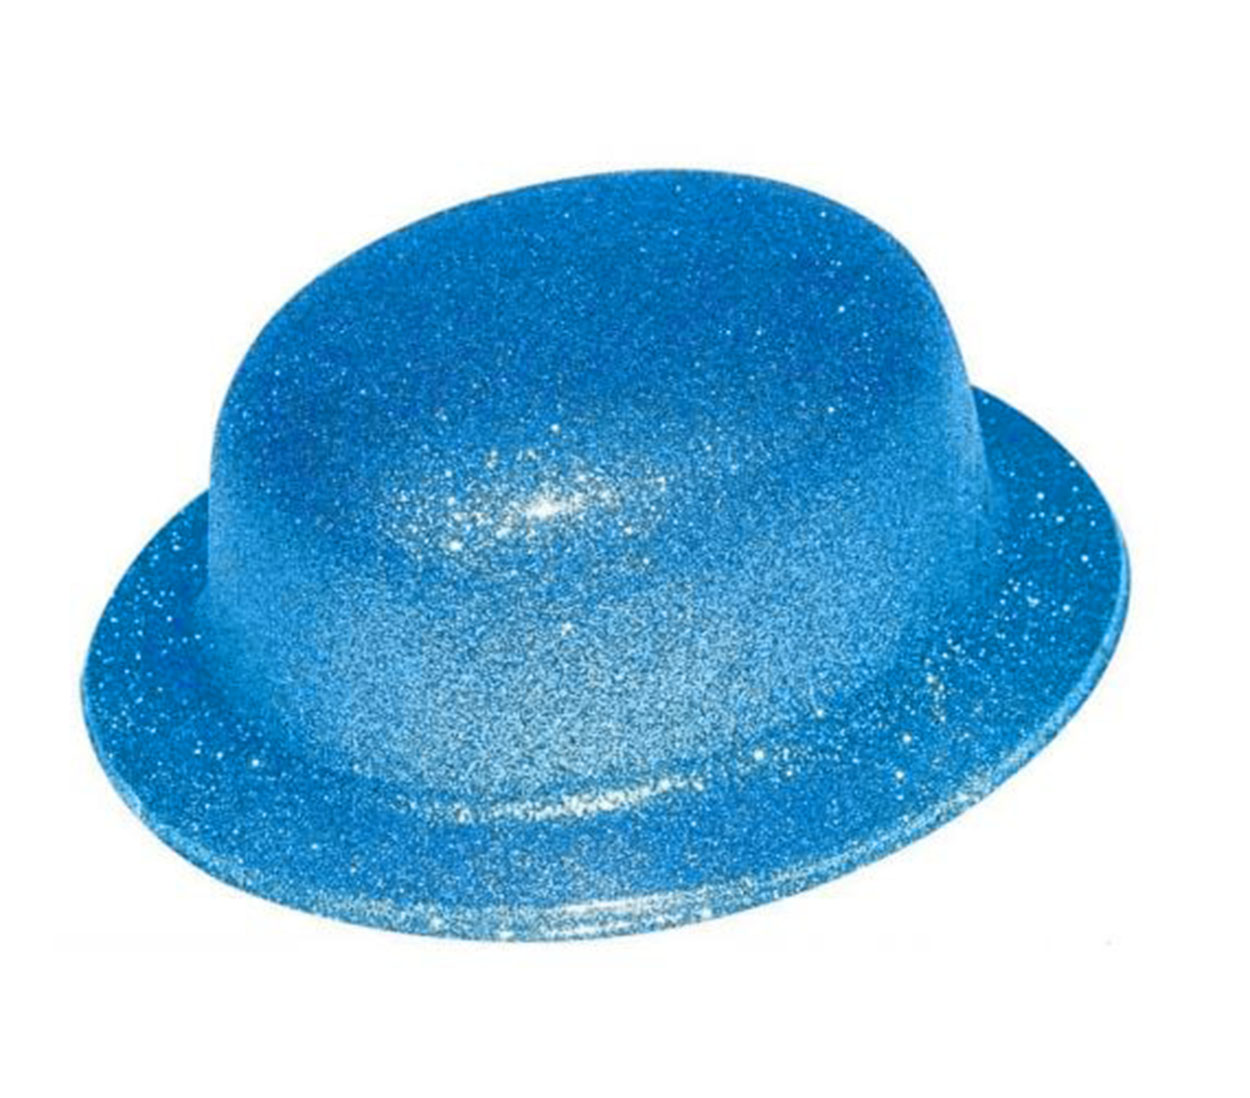 Mavi Renk Simli Melon Yuvarlak Parti Şapkası 24x26 cm (CLZ)